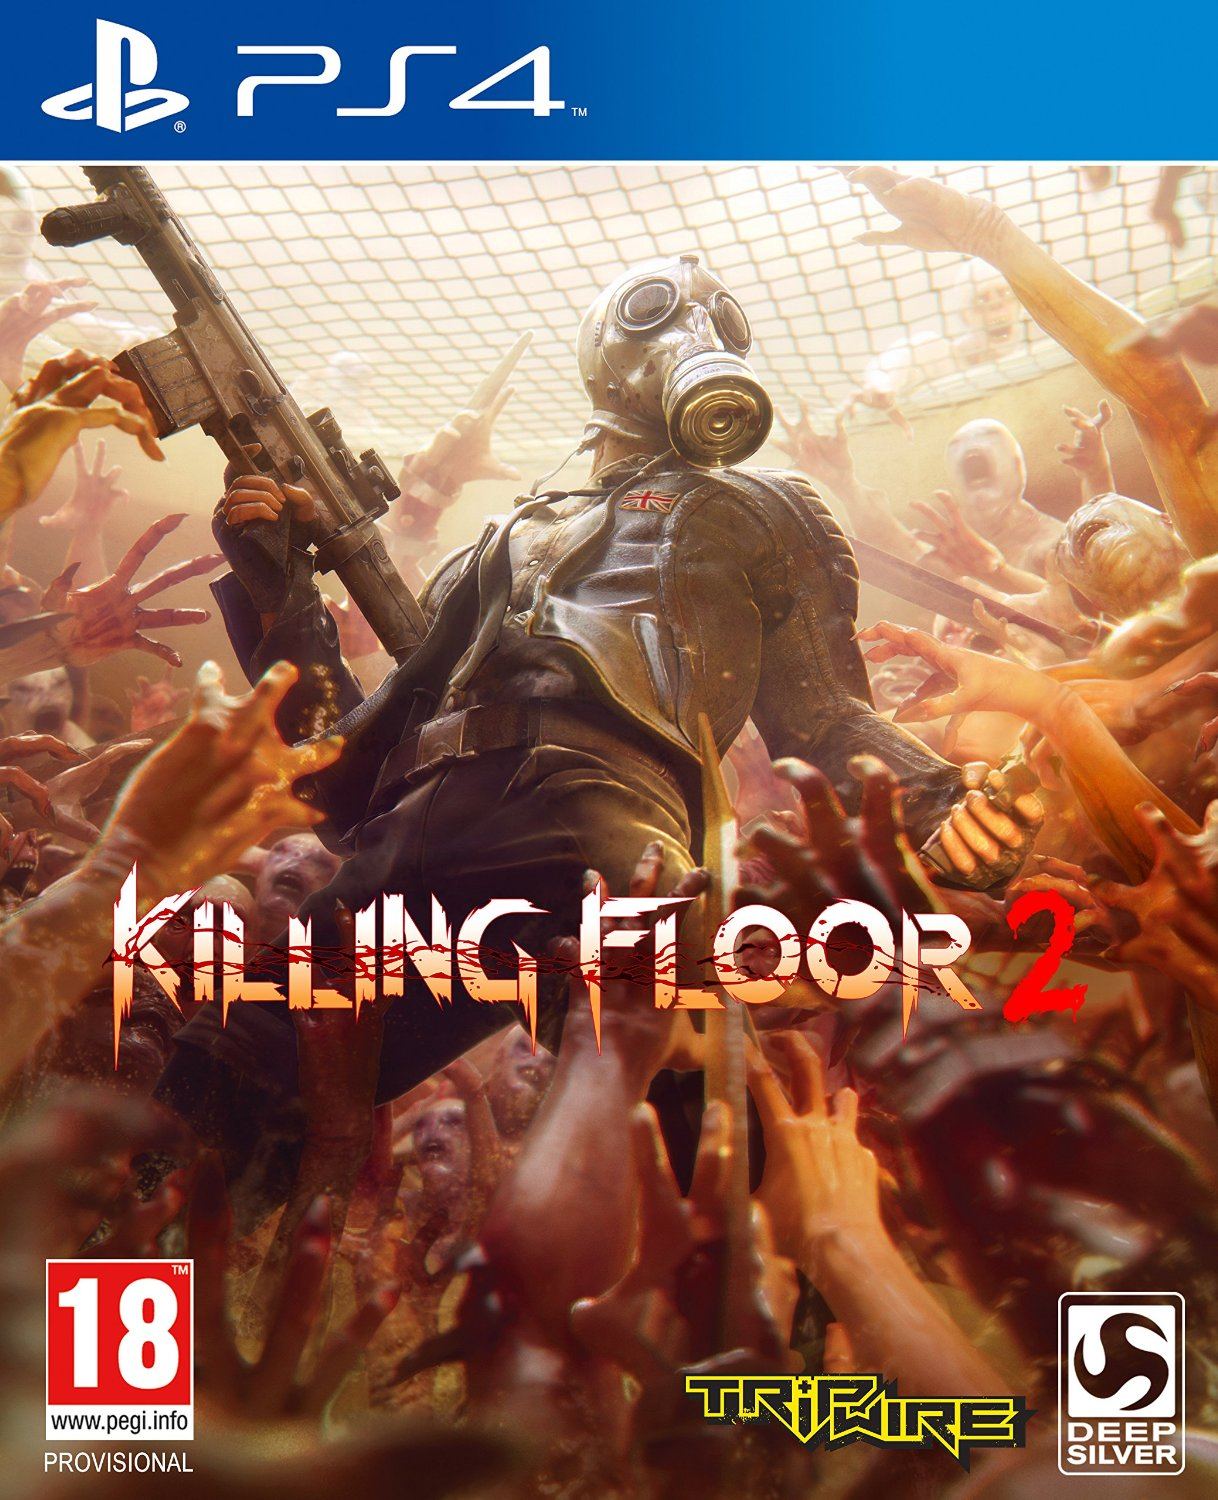 Killing floor incursion release date